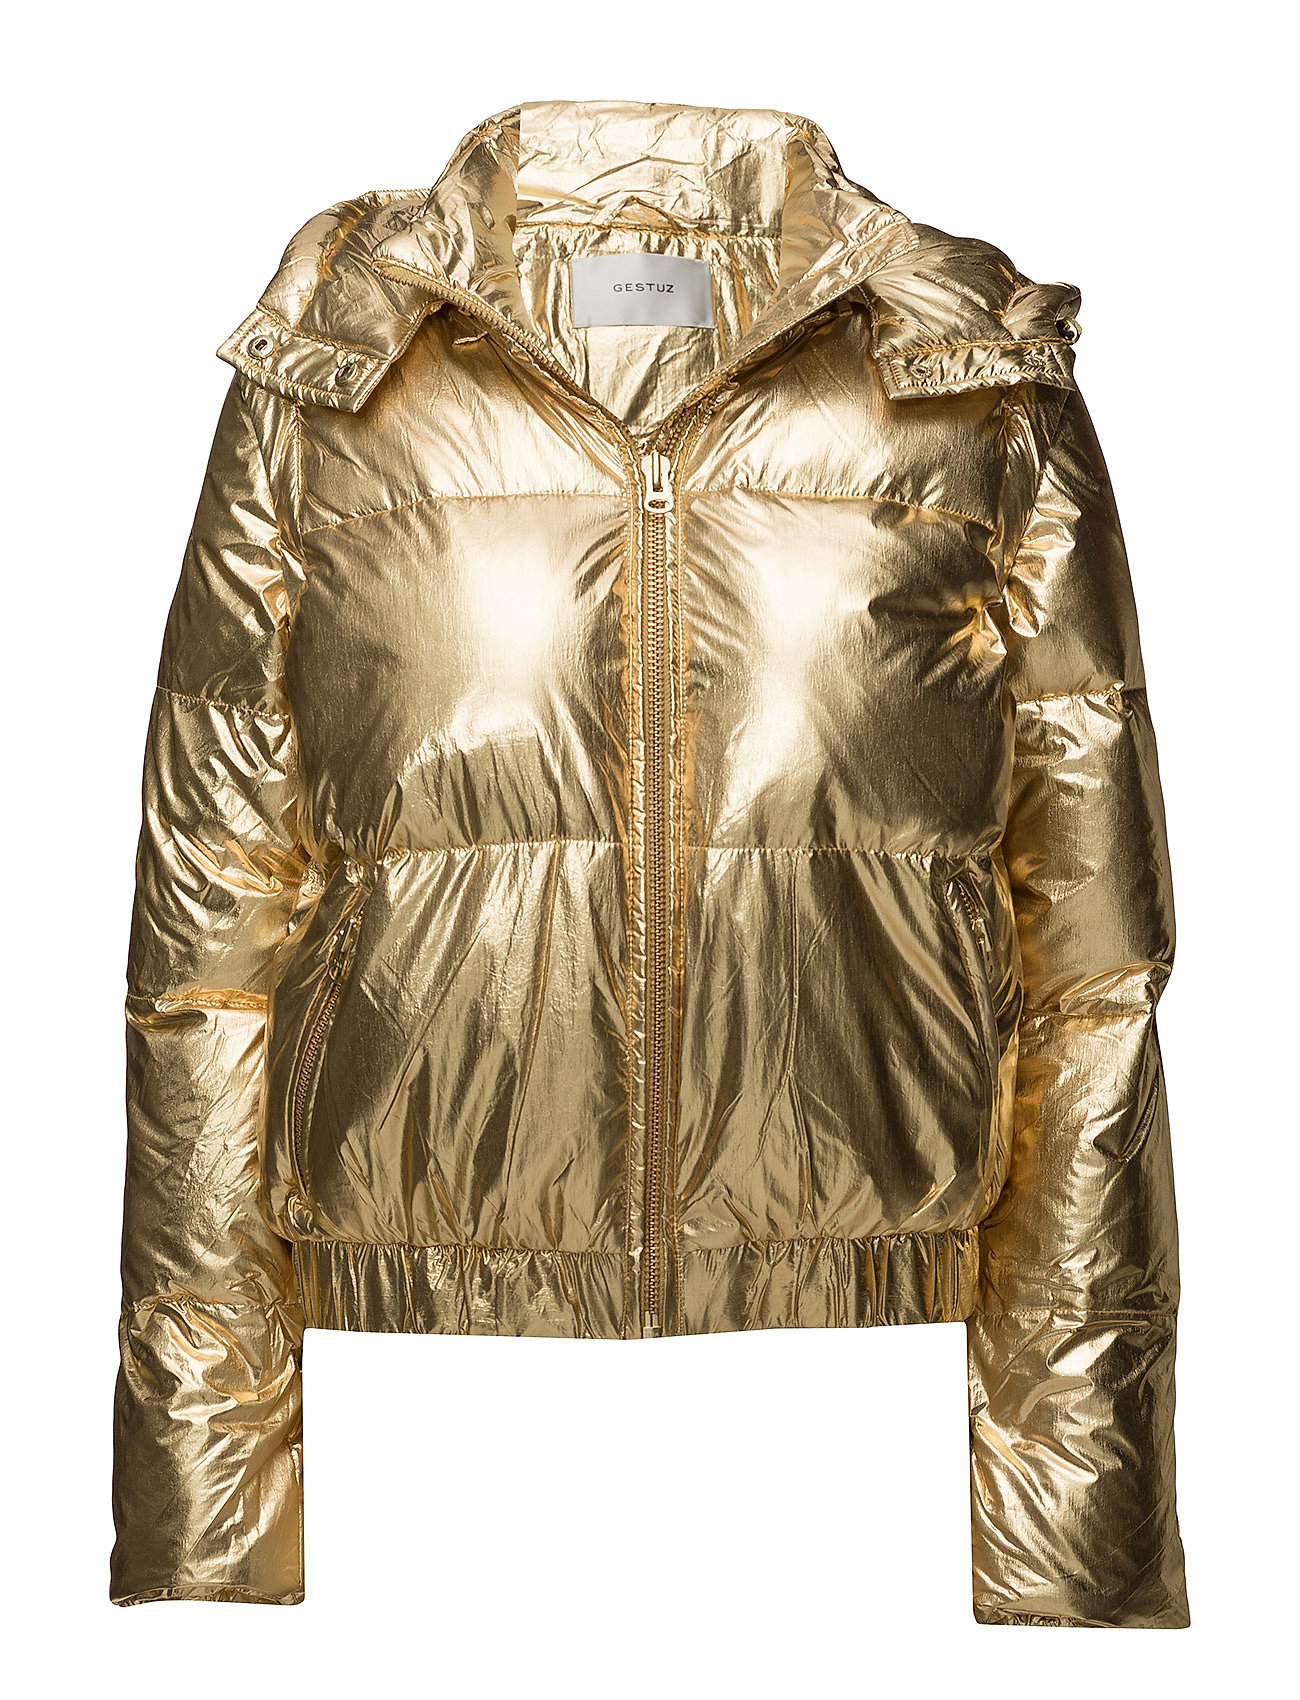 Gold Jacket Ye2017 (Gold Metallic) (1619.40 kr) Gestuz